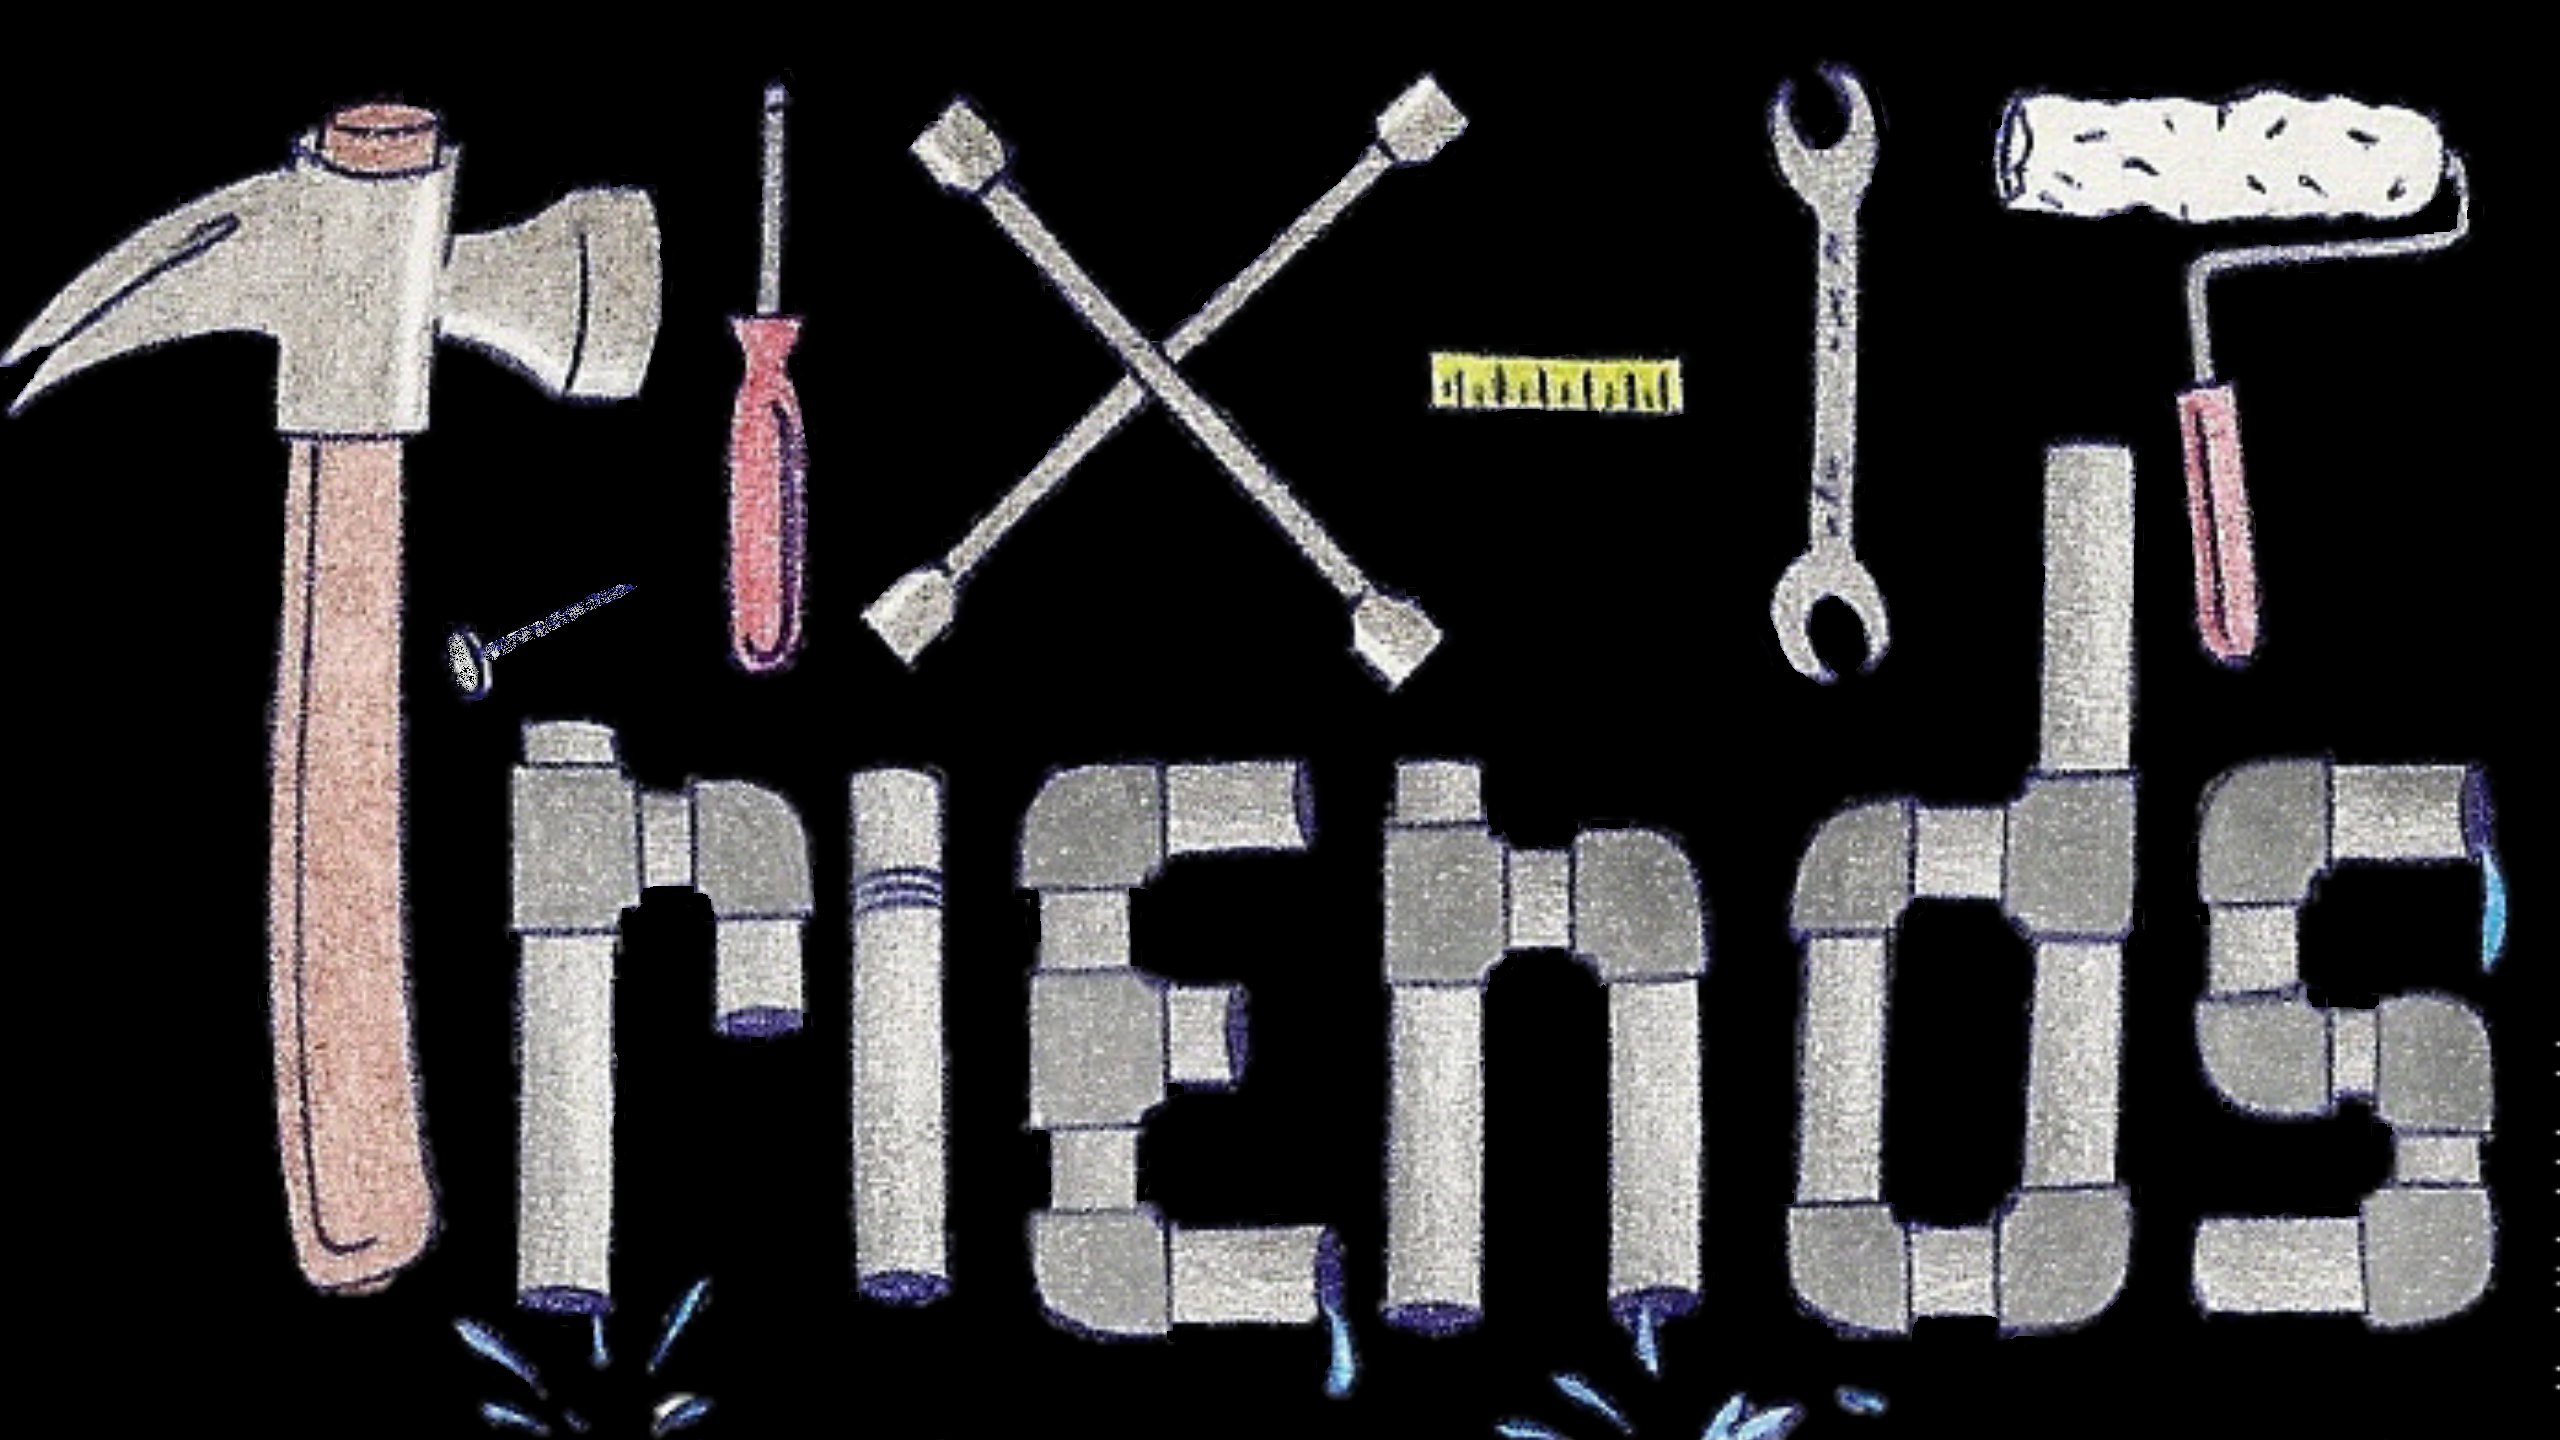 The Fix It Friends Logo